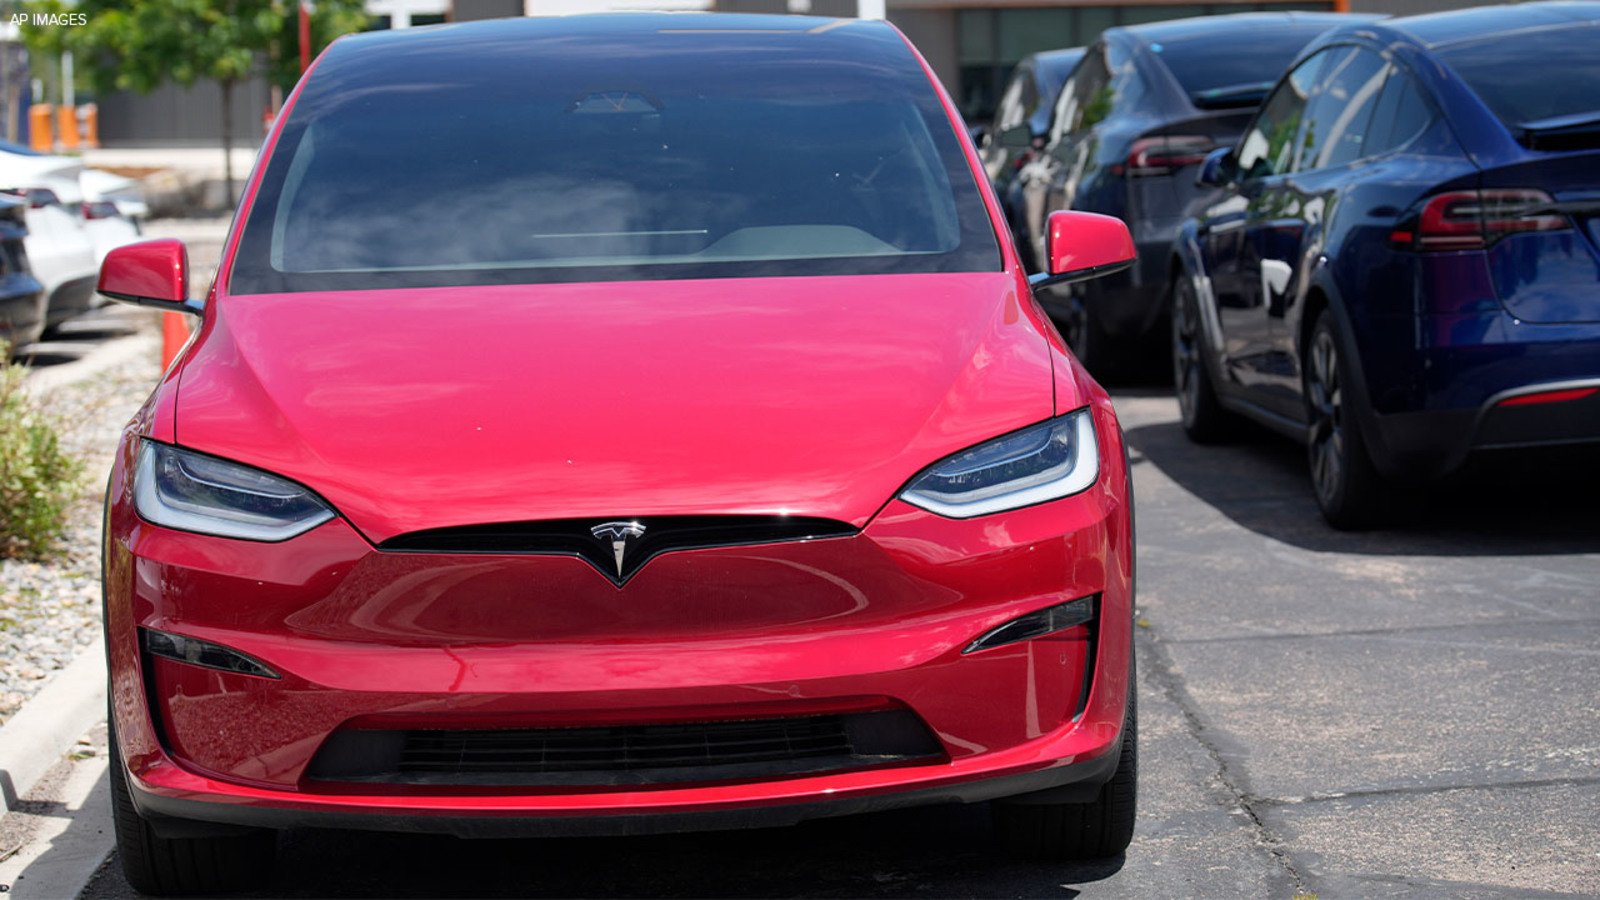 TSLA: Tesla shares plummet after company reports falling profits [Video]